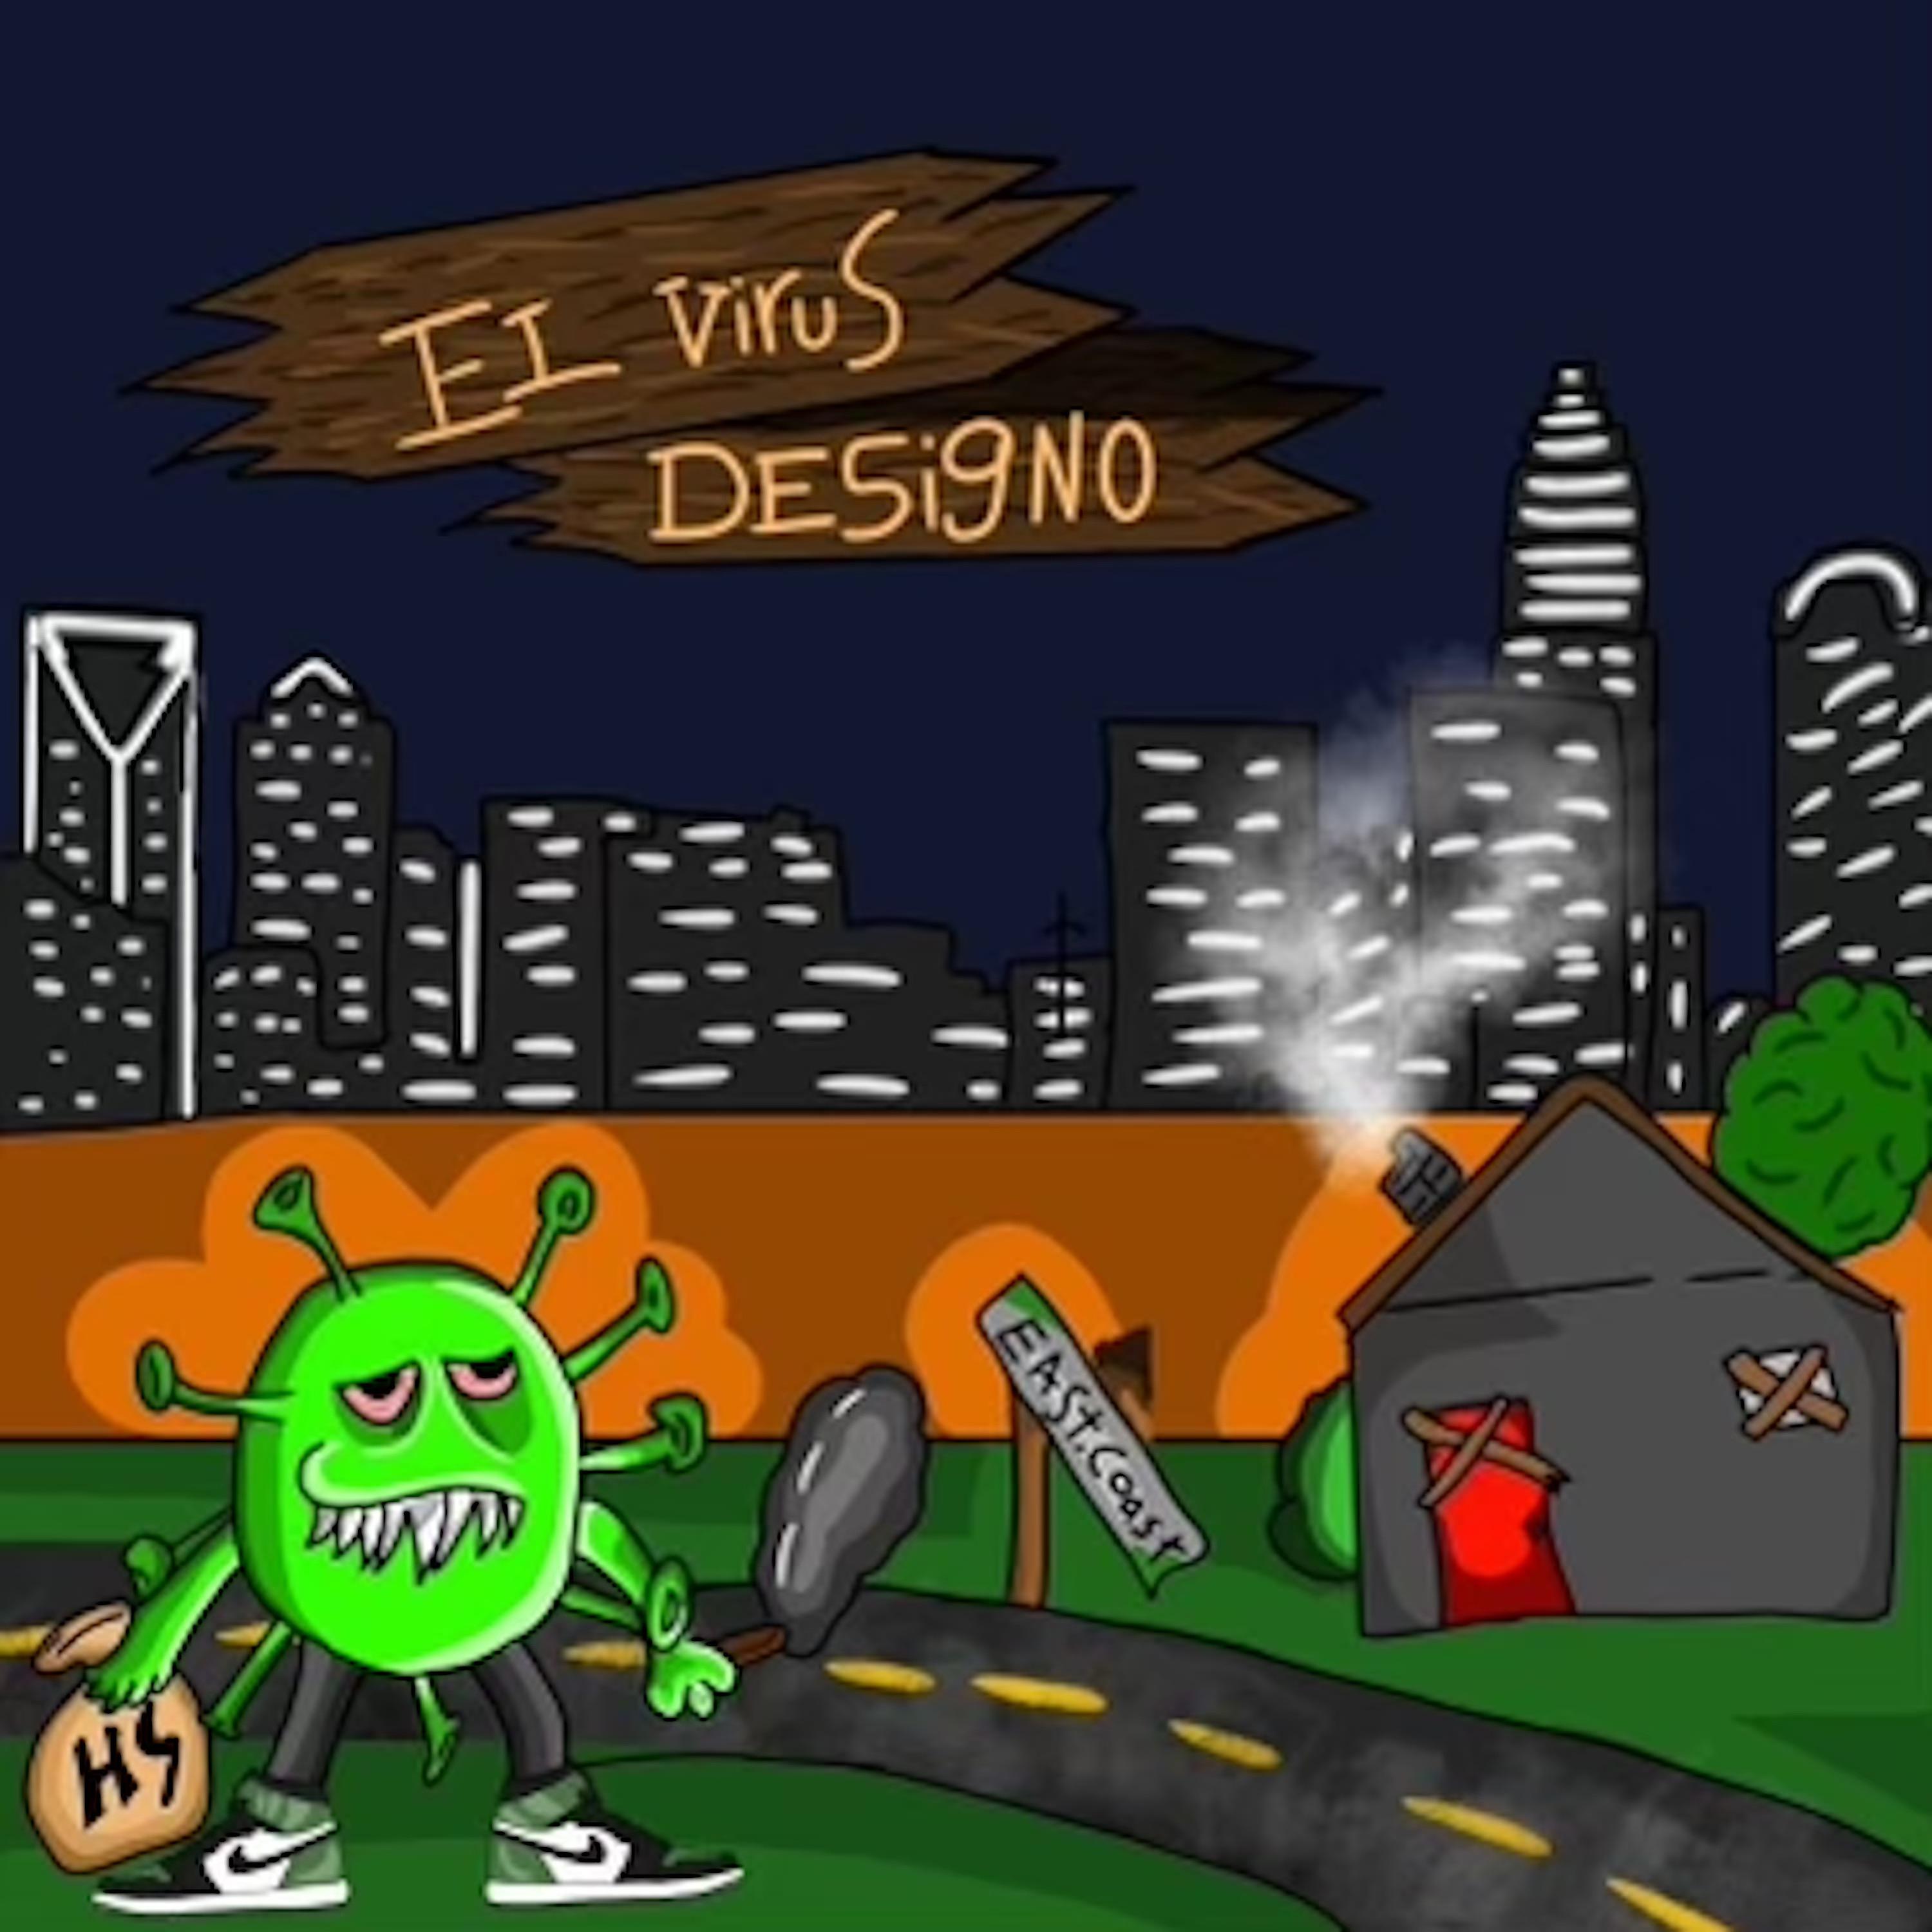 Постер альбома El Virus